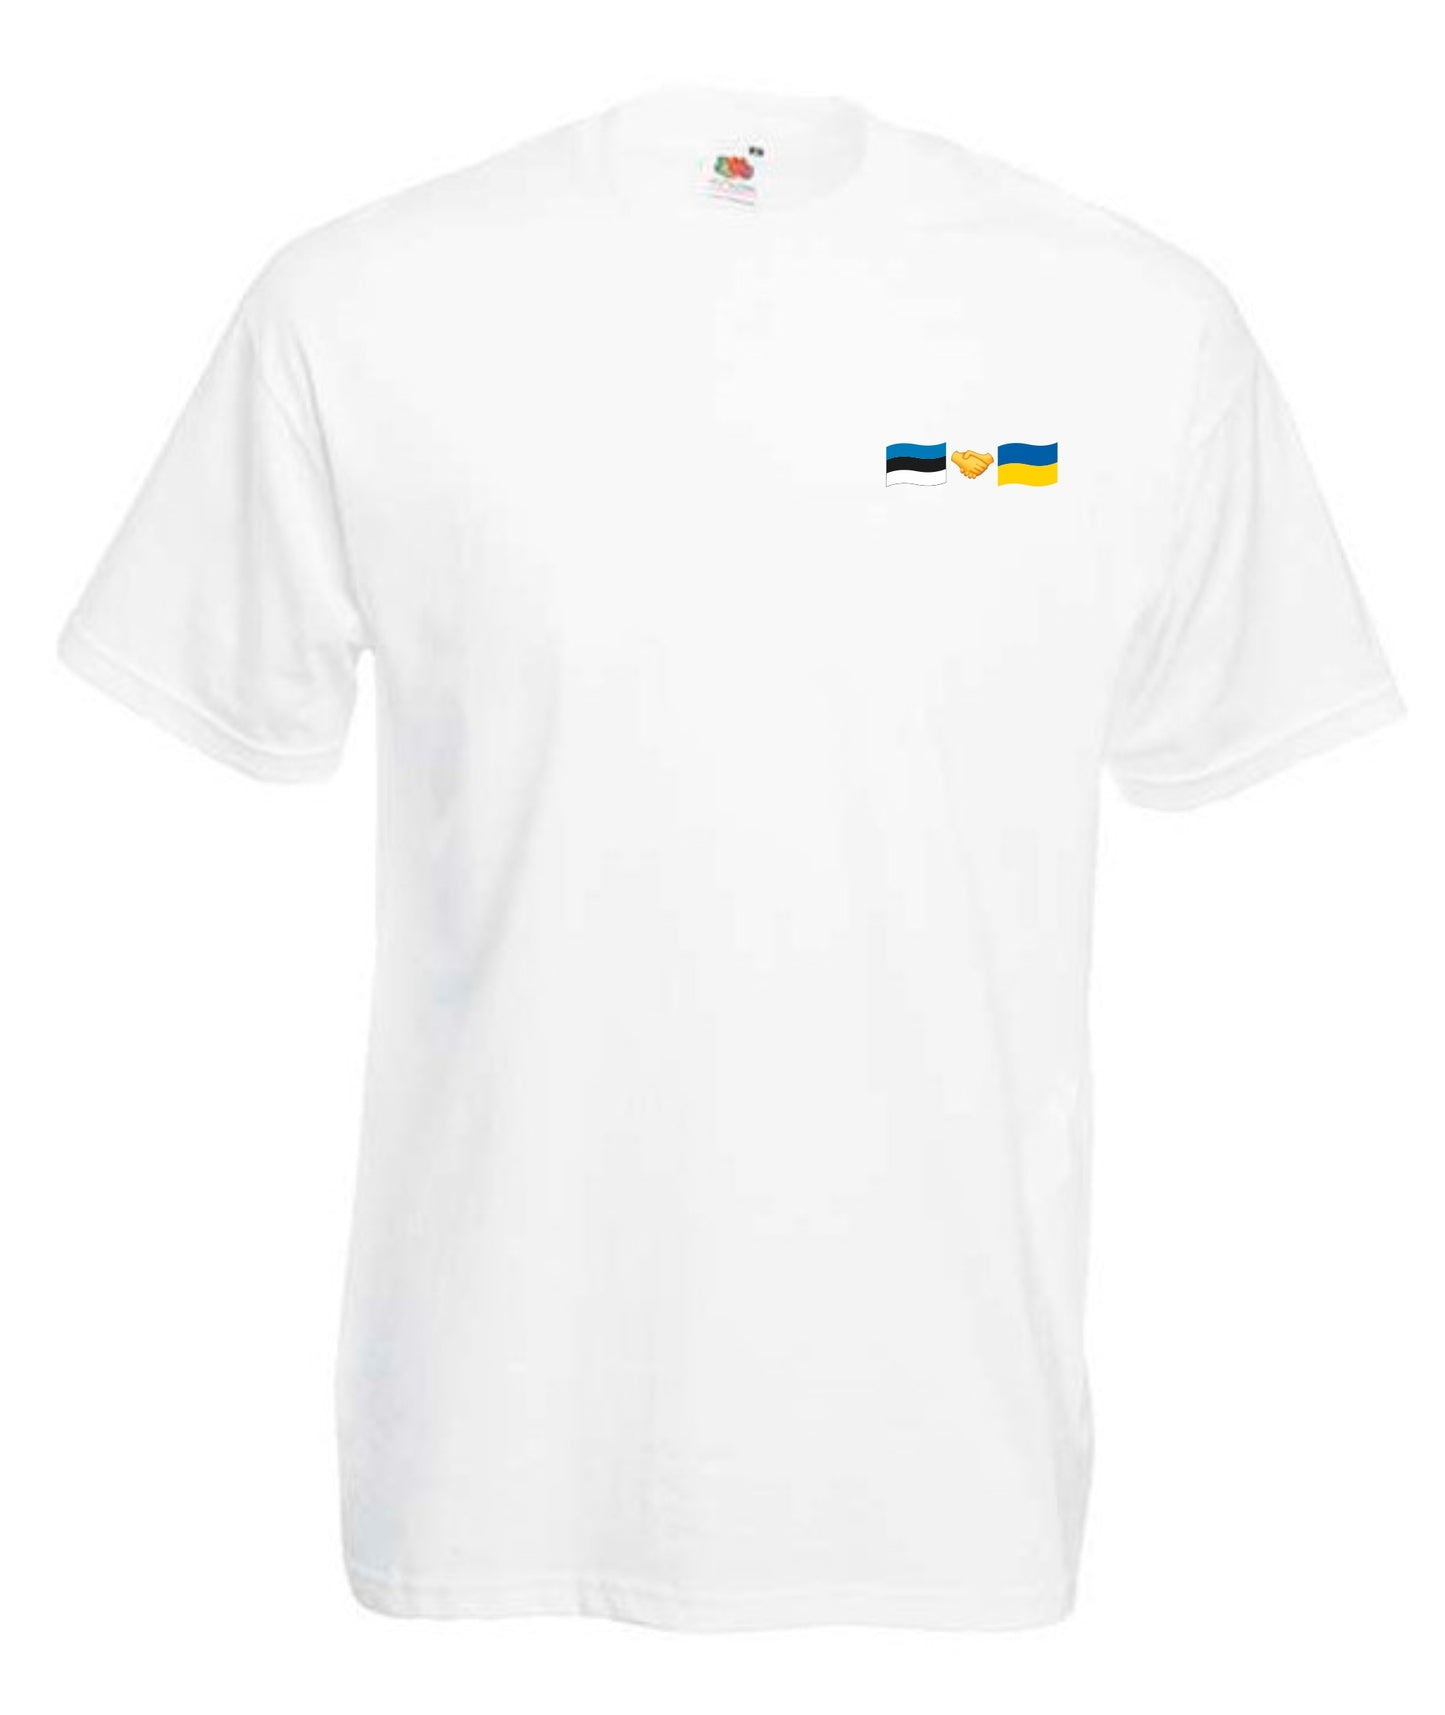 Т-shirt Estonia + Ukraine (small logo)